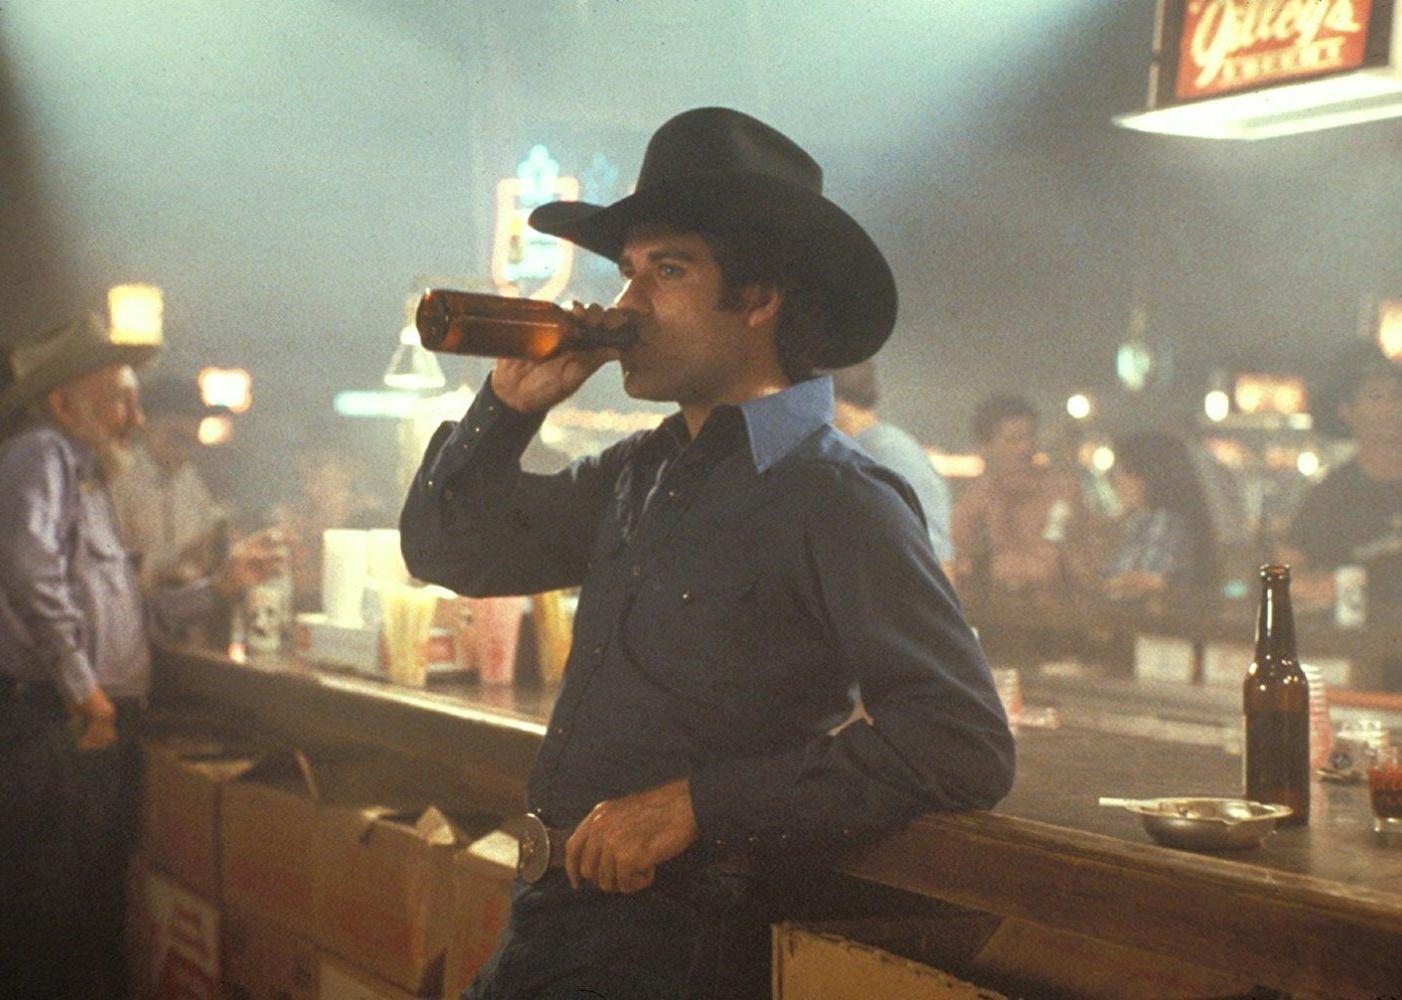 John Travolta at a bar wearing a blue western shirt and black cowboy hat.